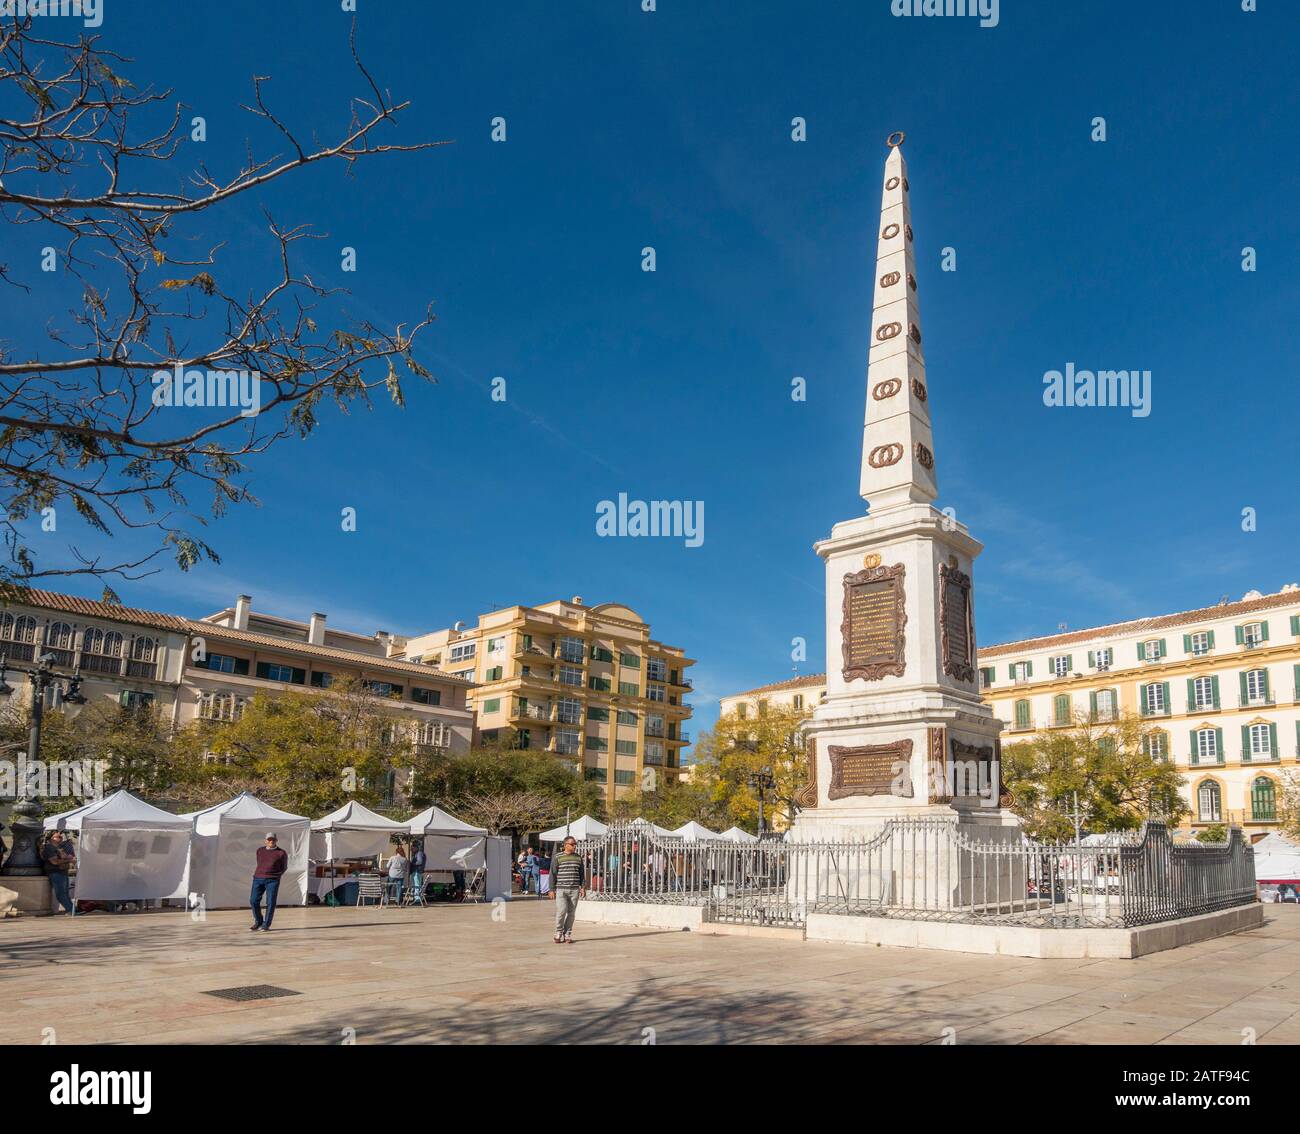 Malaga Spain. Plaza de la Merced (Mercy Square) with the Monument to Torrijos, public square, Malaga, Andalucia, Spain. Stock Photo